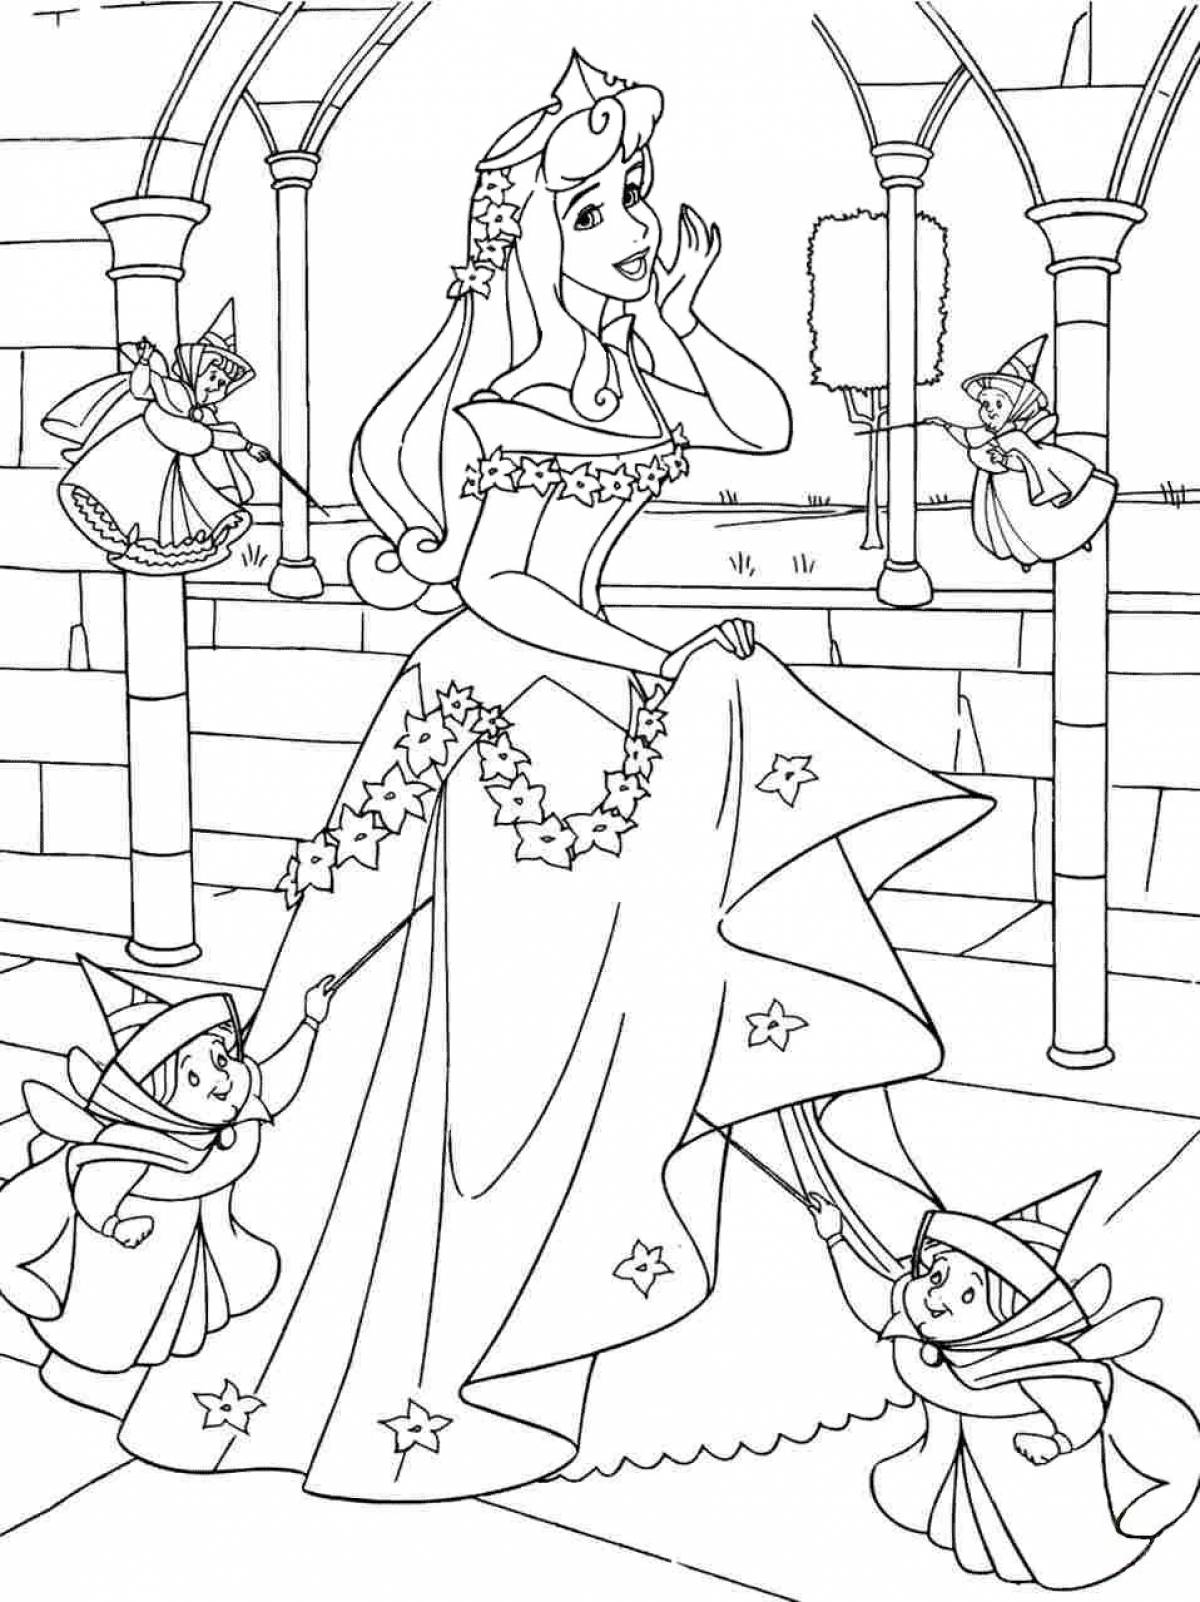 Colorful princess coloring page